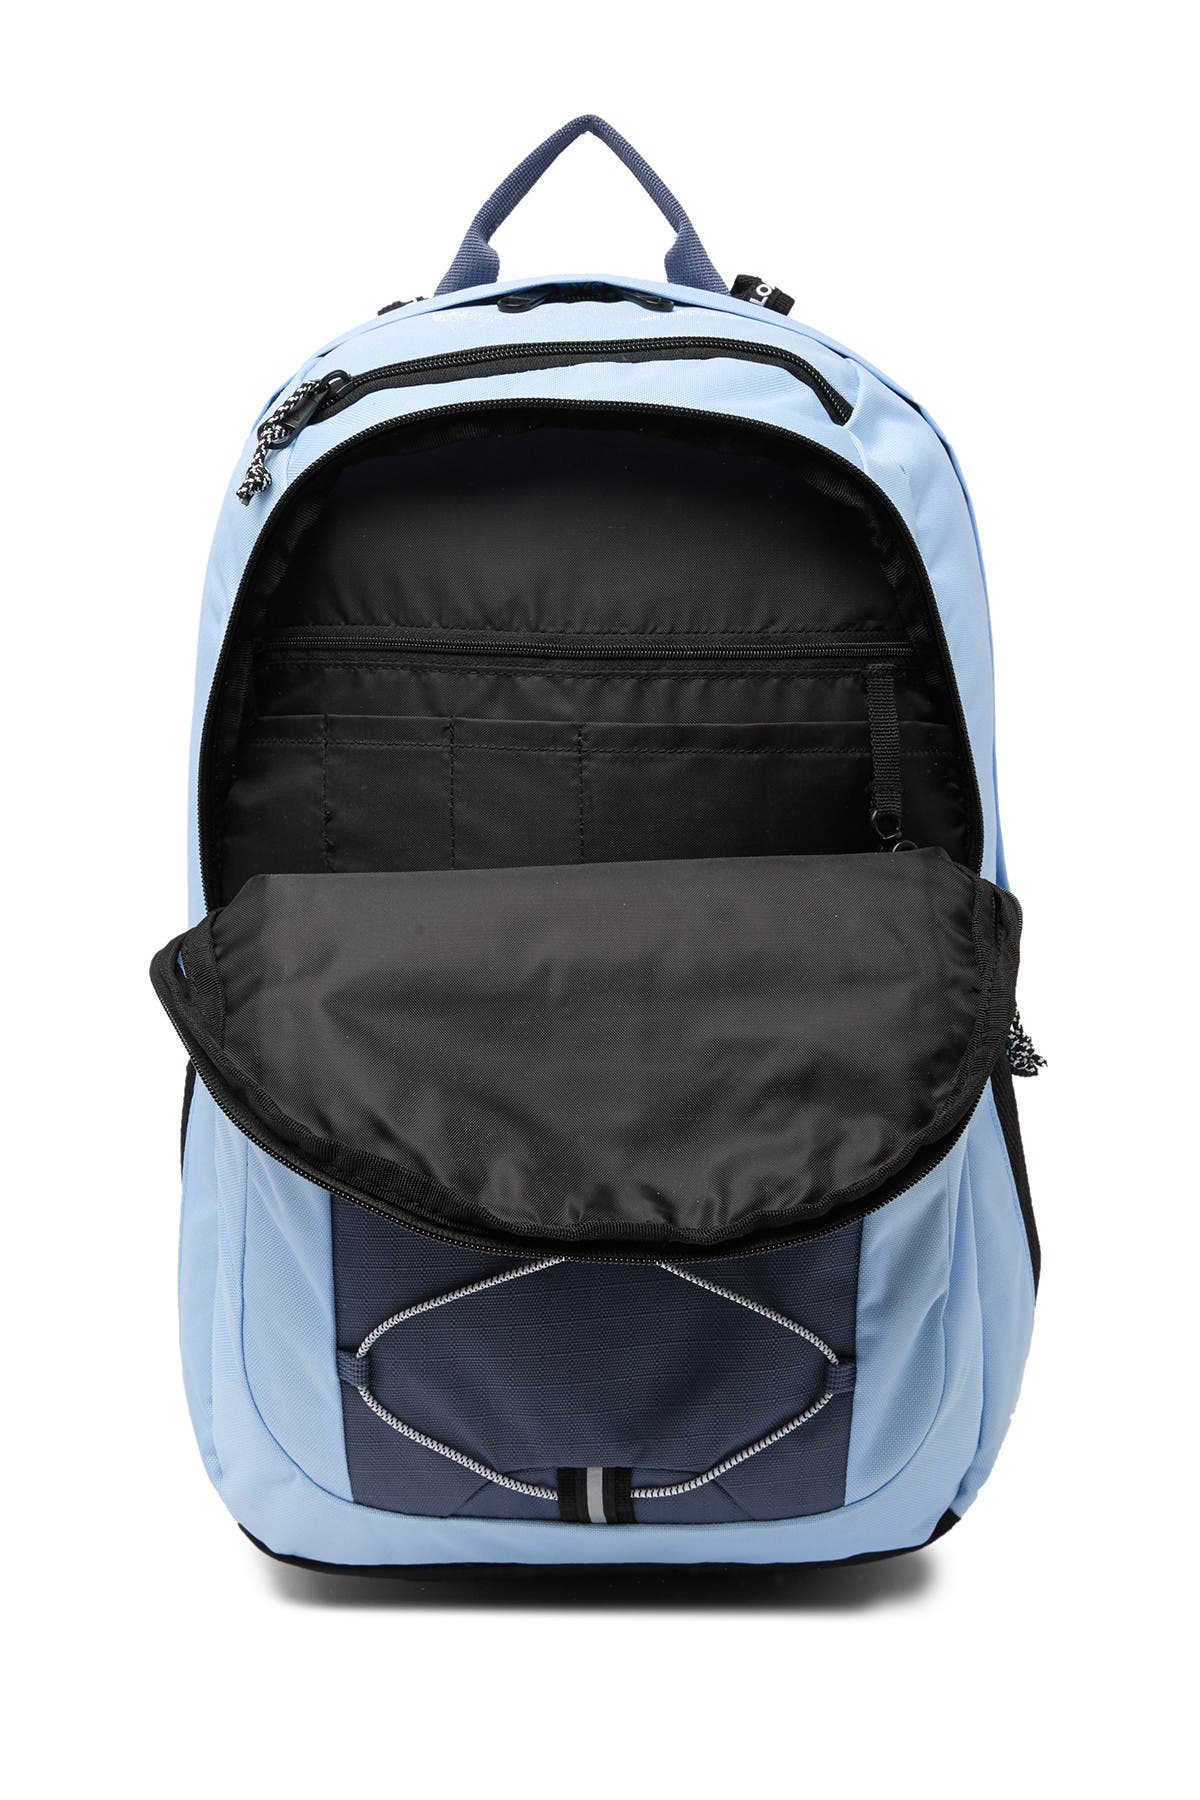 adidas glow blue backpack